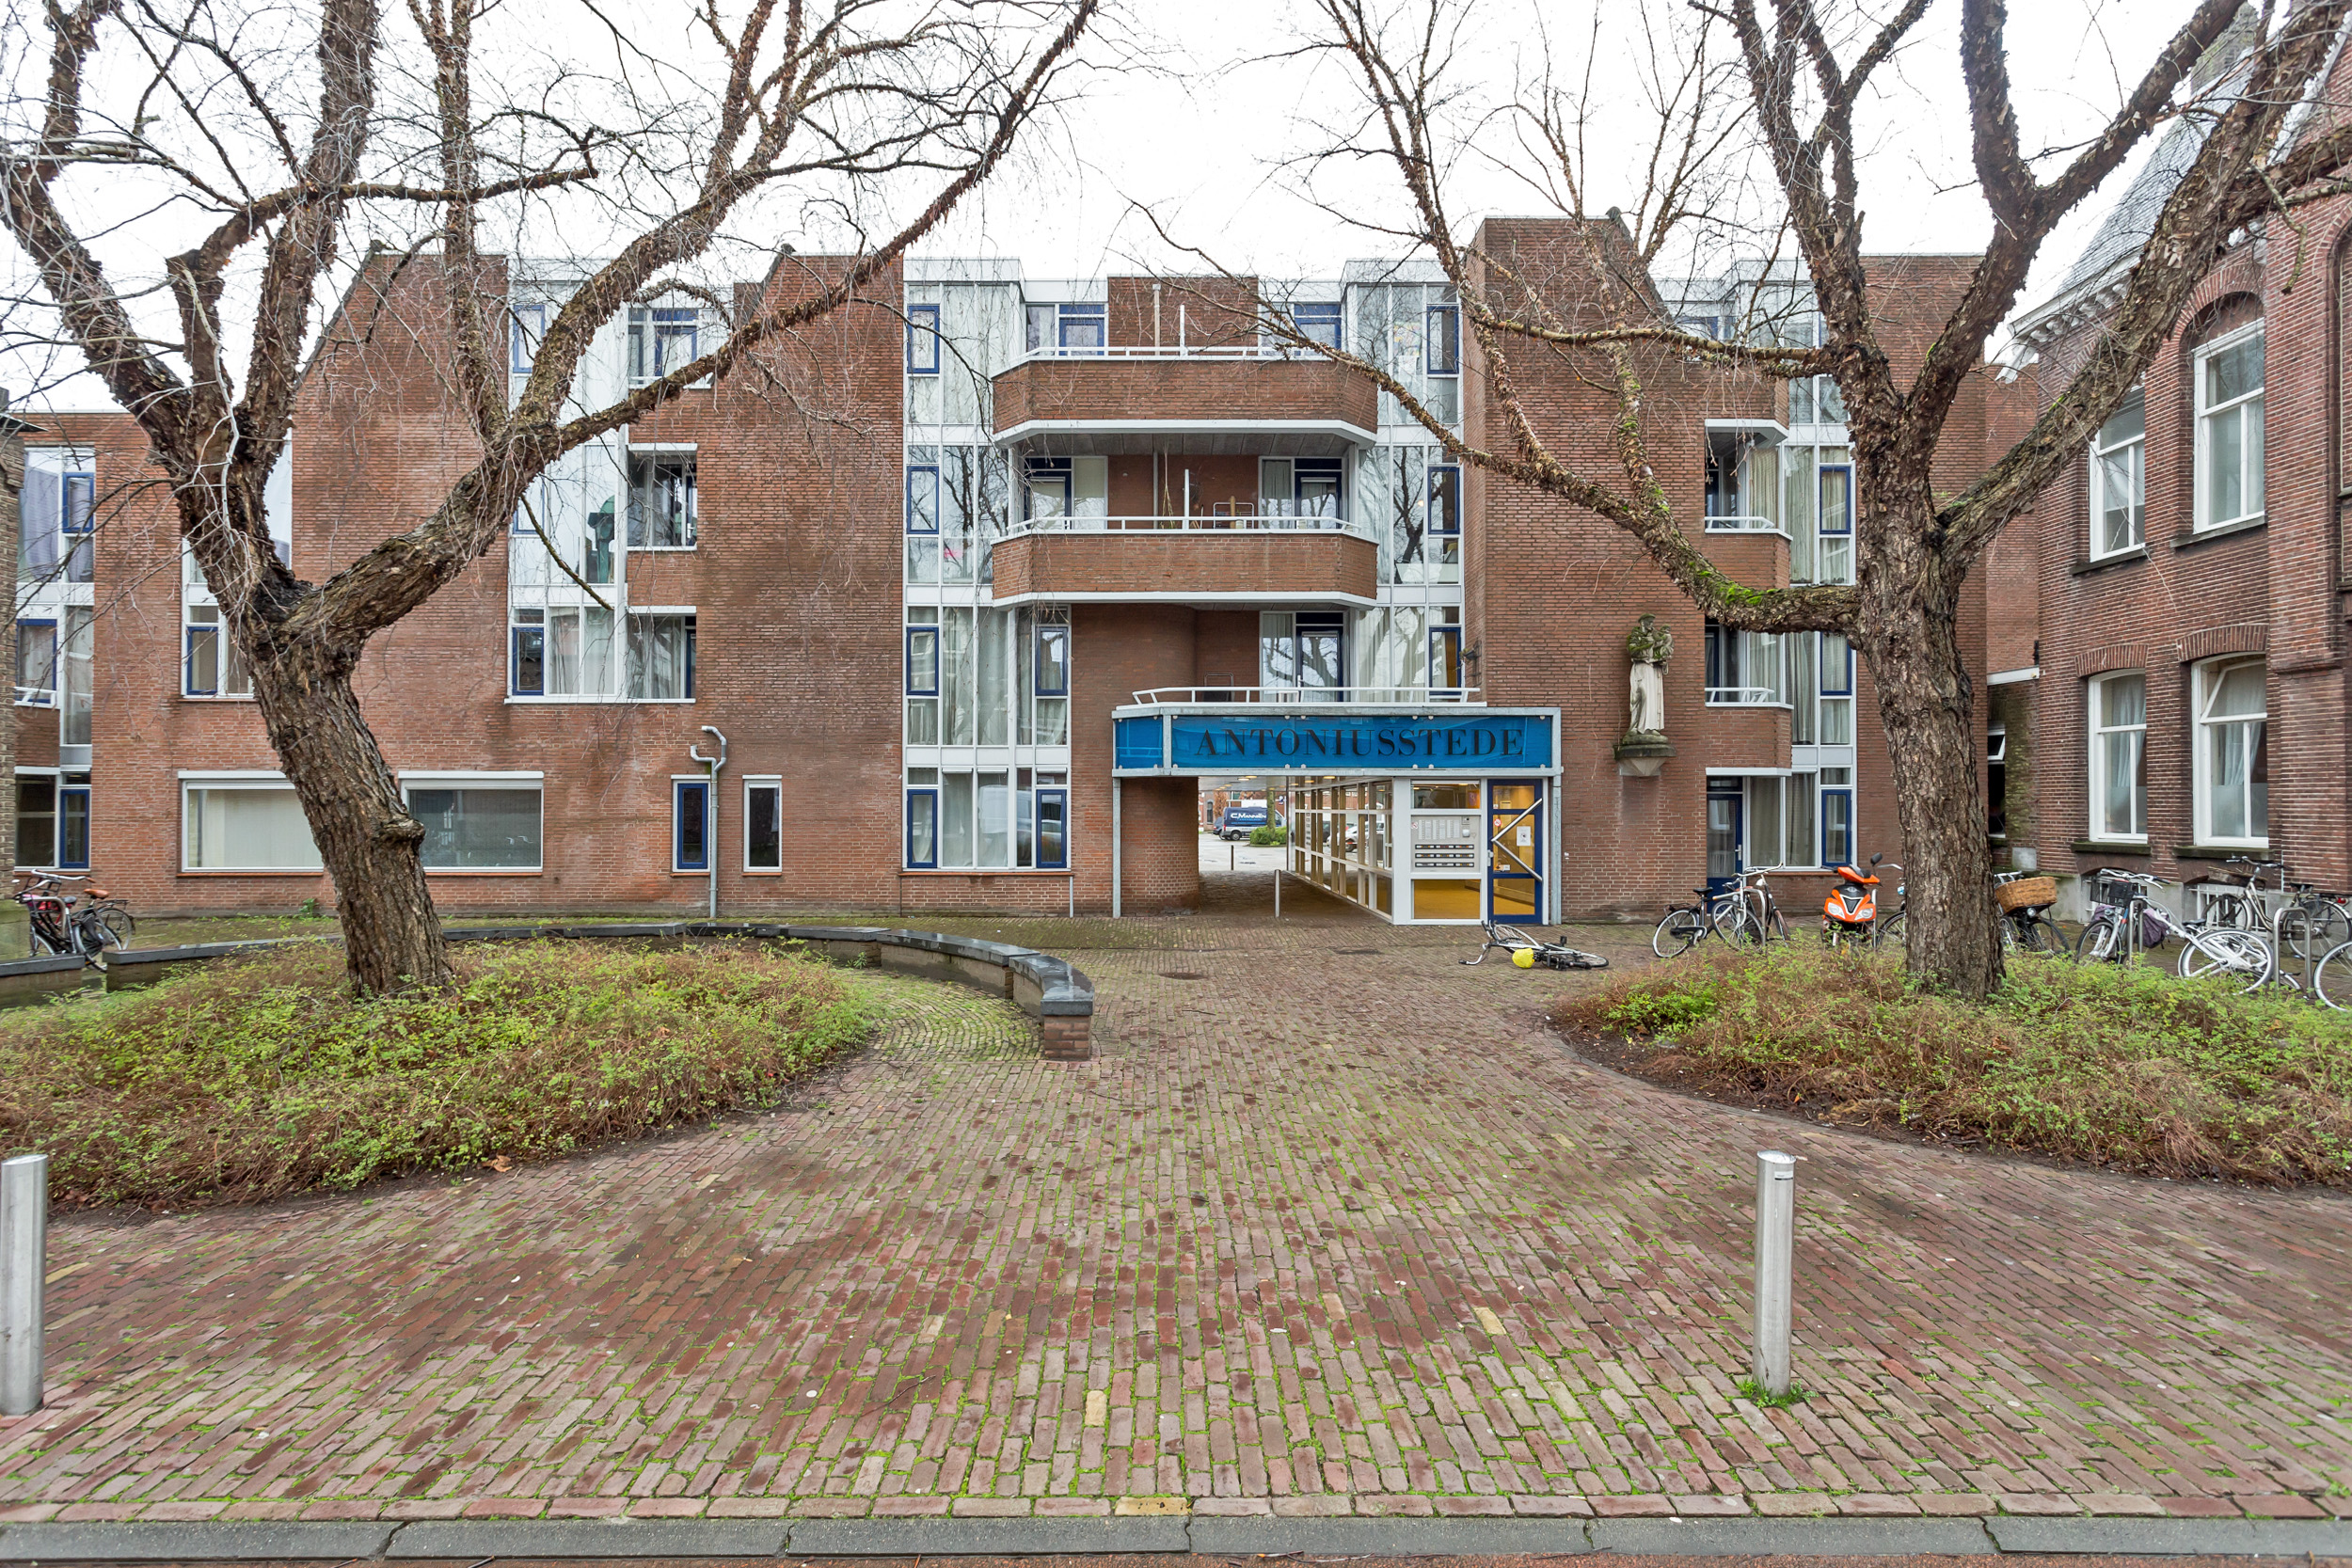 Antoniusstede 39, 4702 XT Roosendaal, Nederland